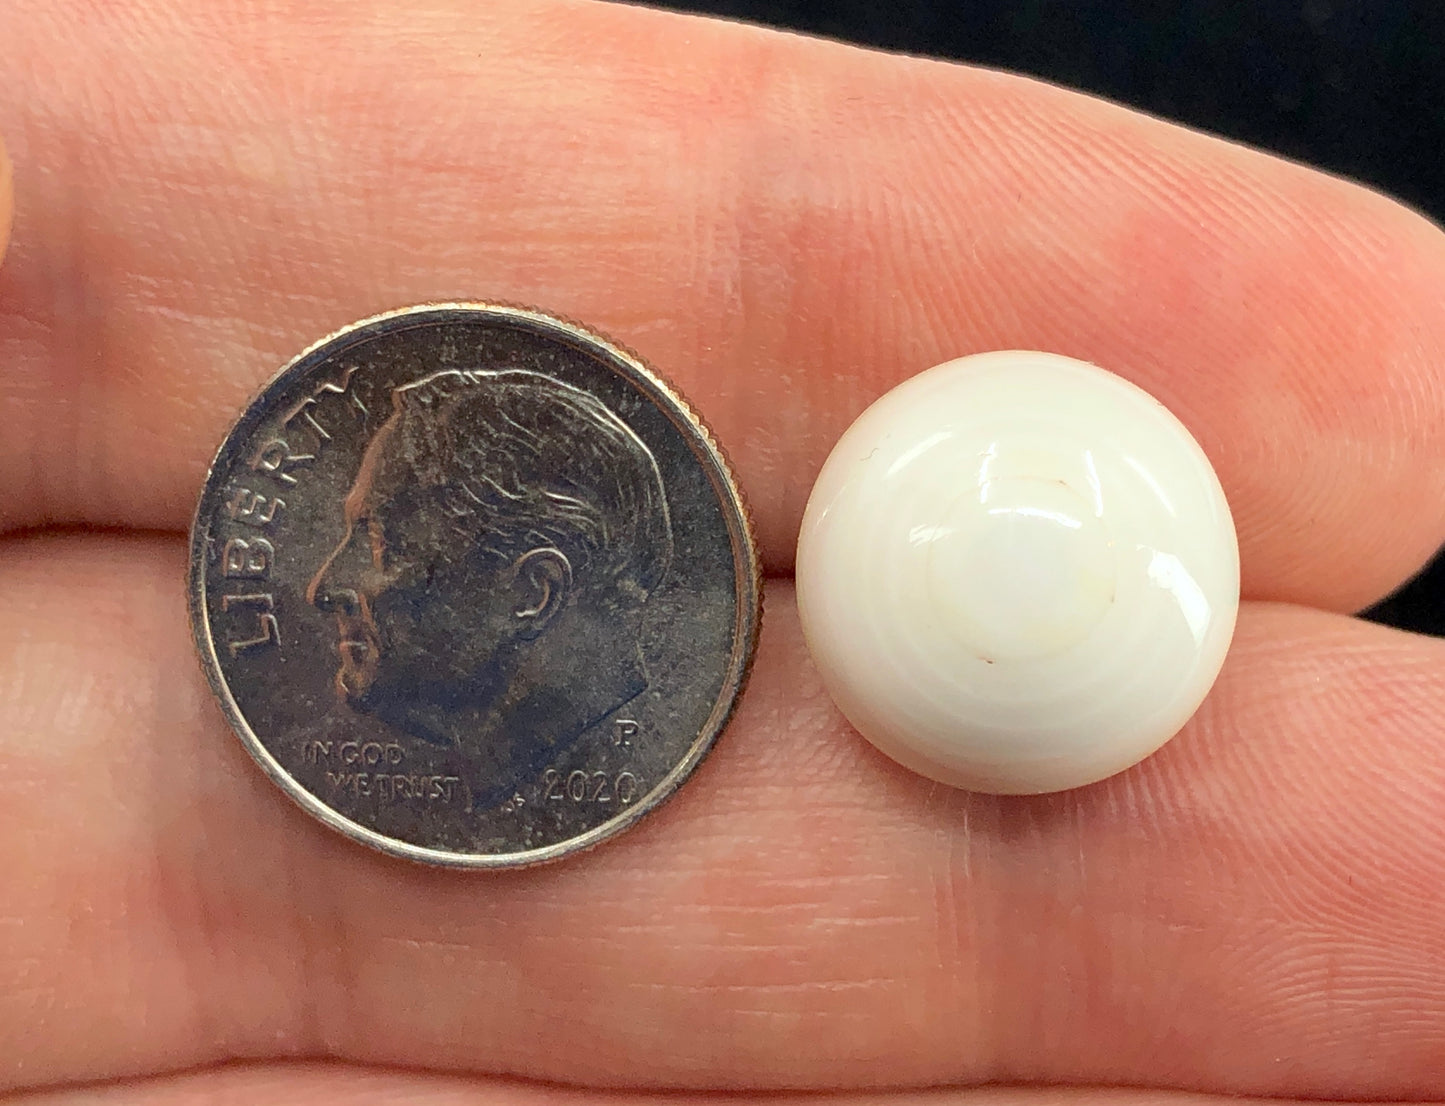 GIA 12.52 ct. Natural White Quahog Pearl